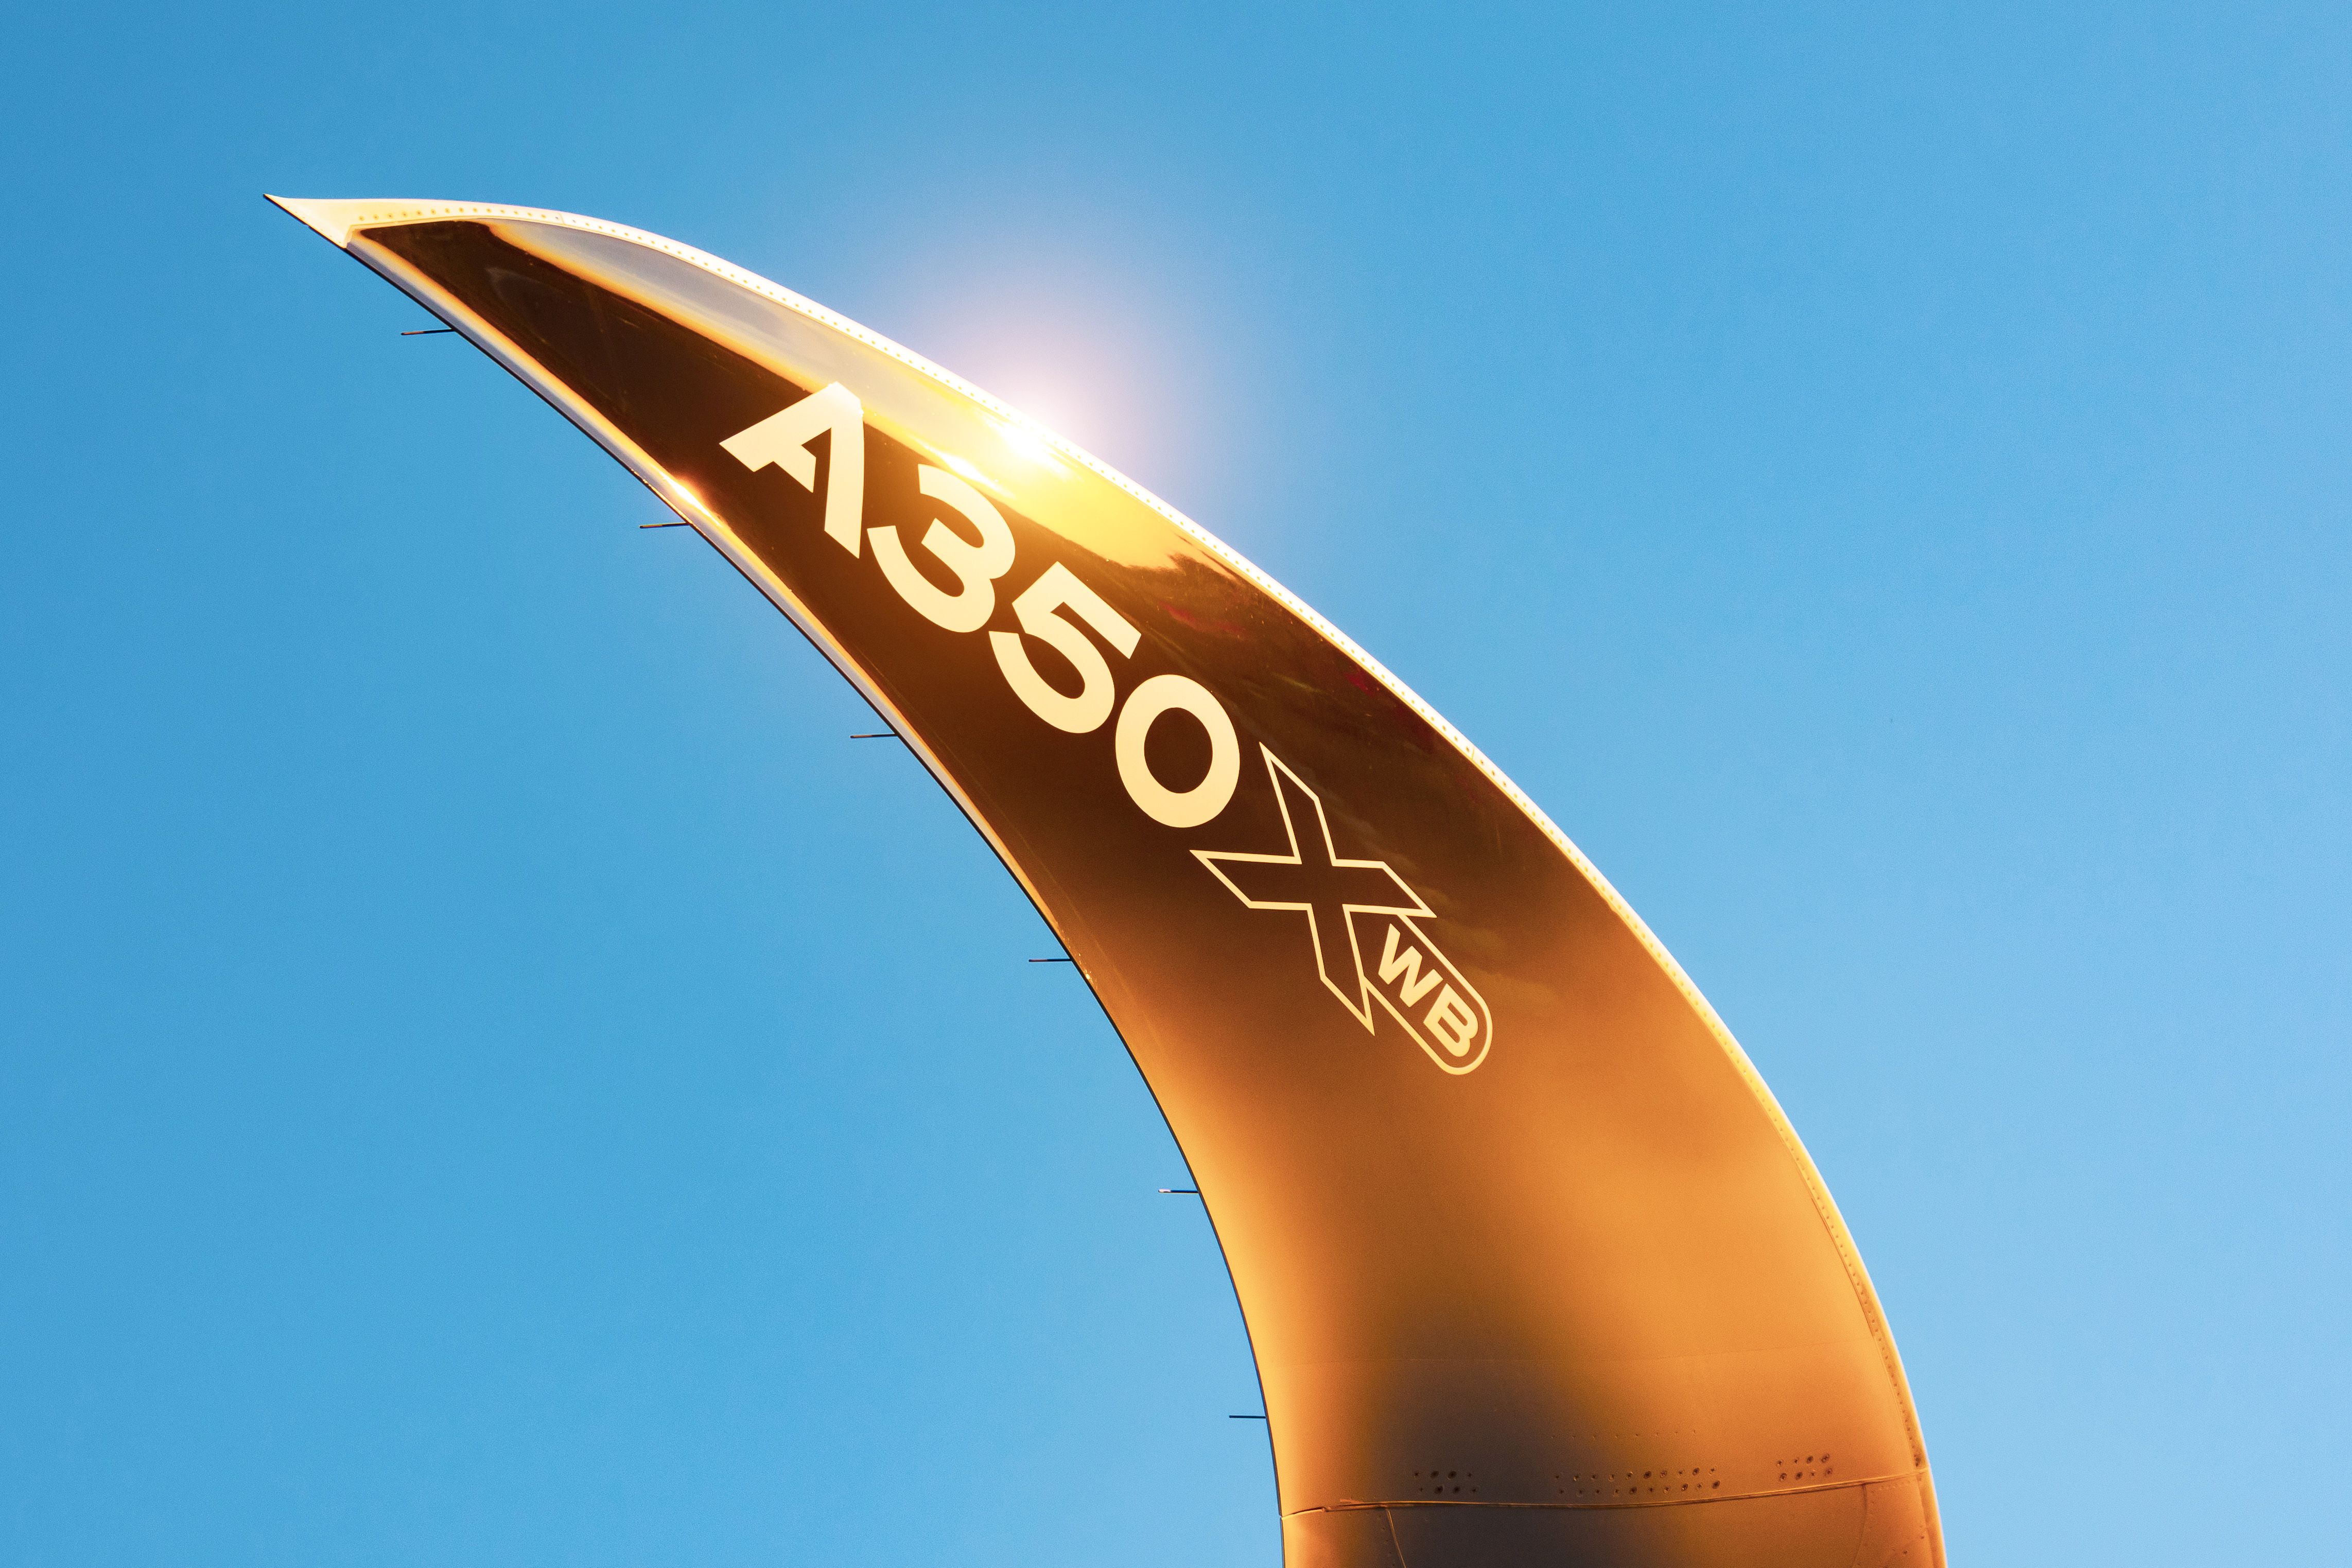 An Airbus A350 wingtip